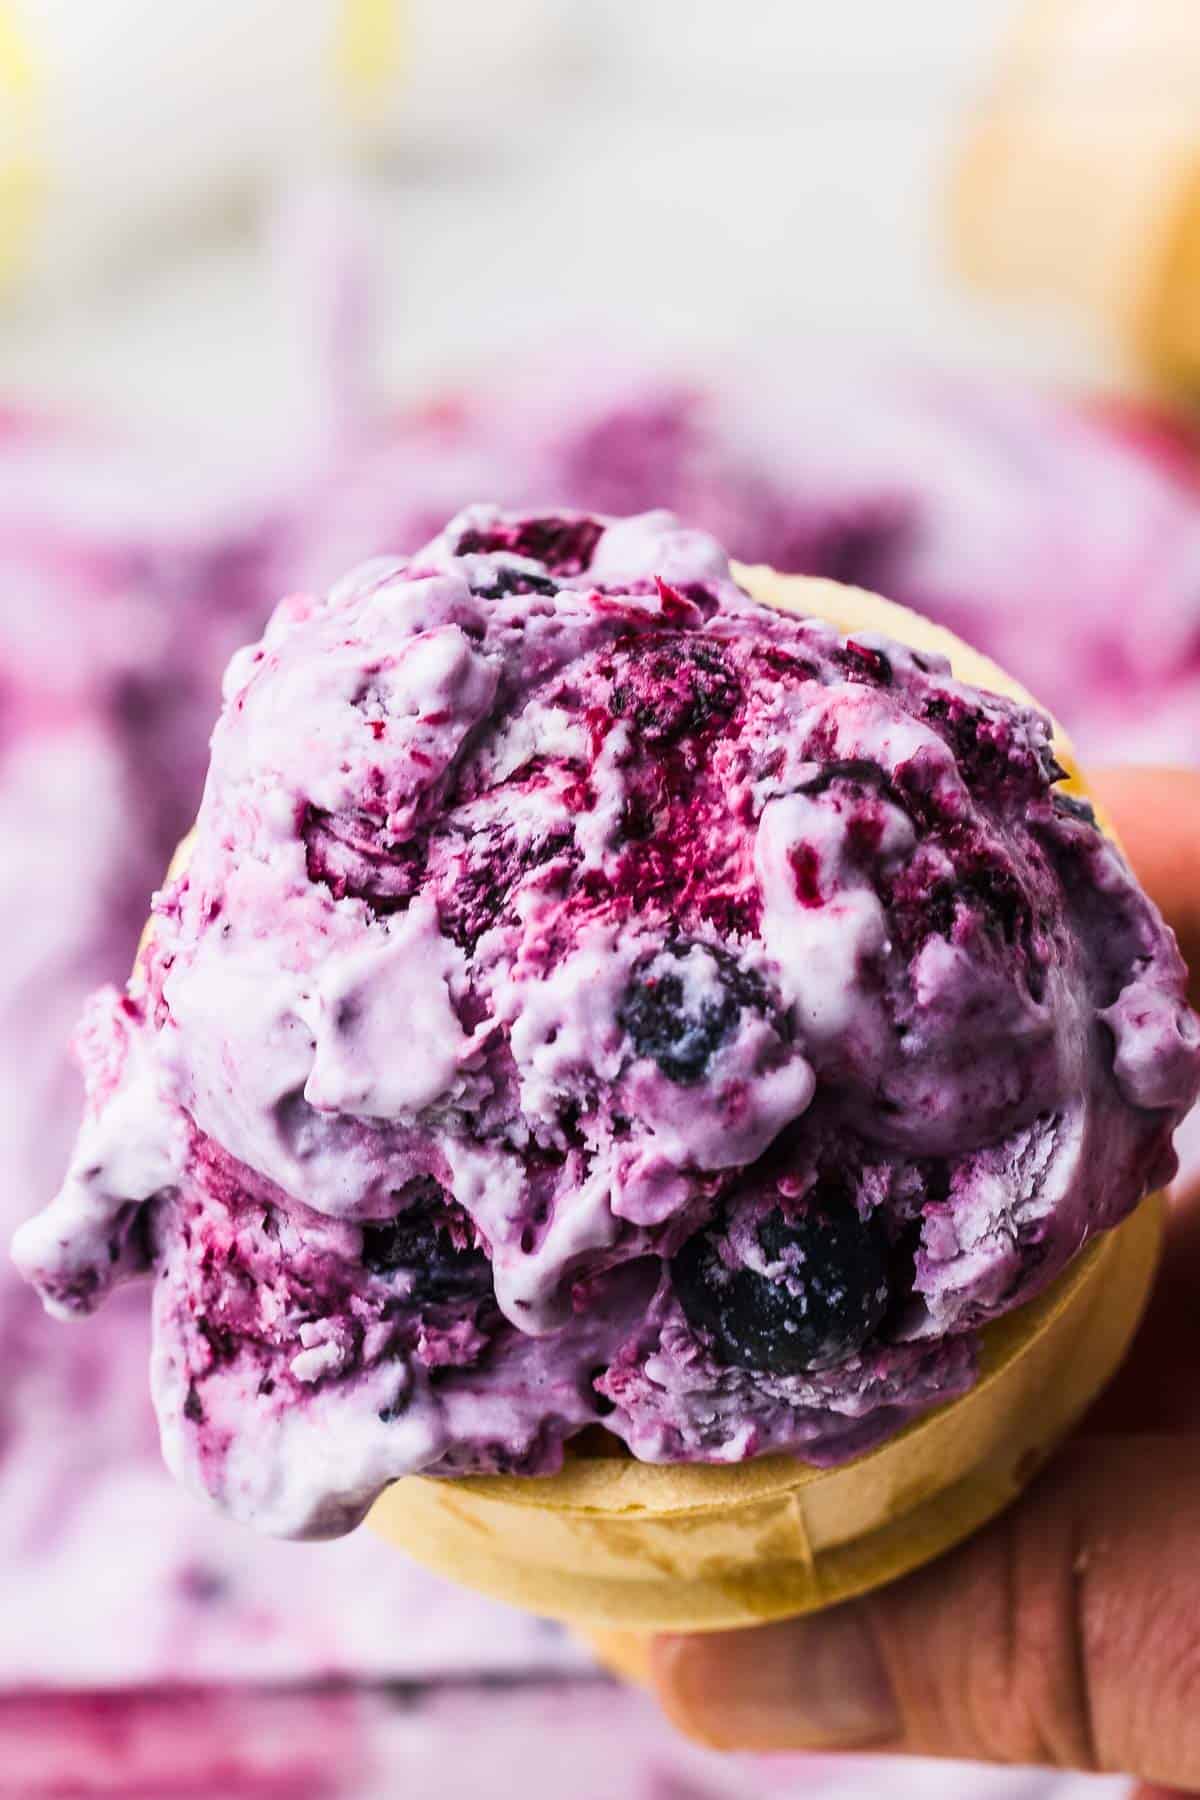 Closeup of Blueberry Ice Cream in cone.